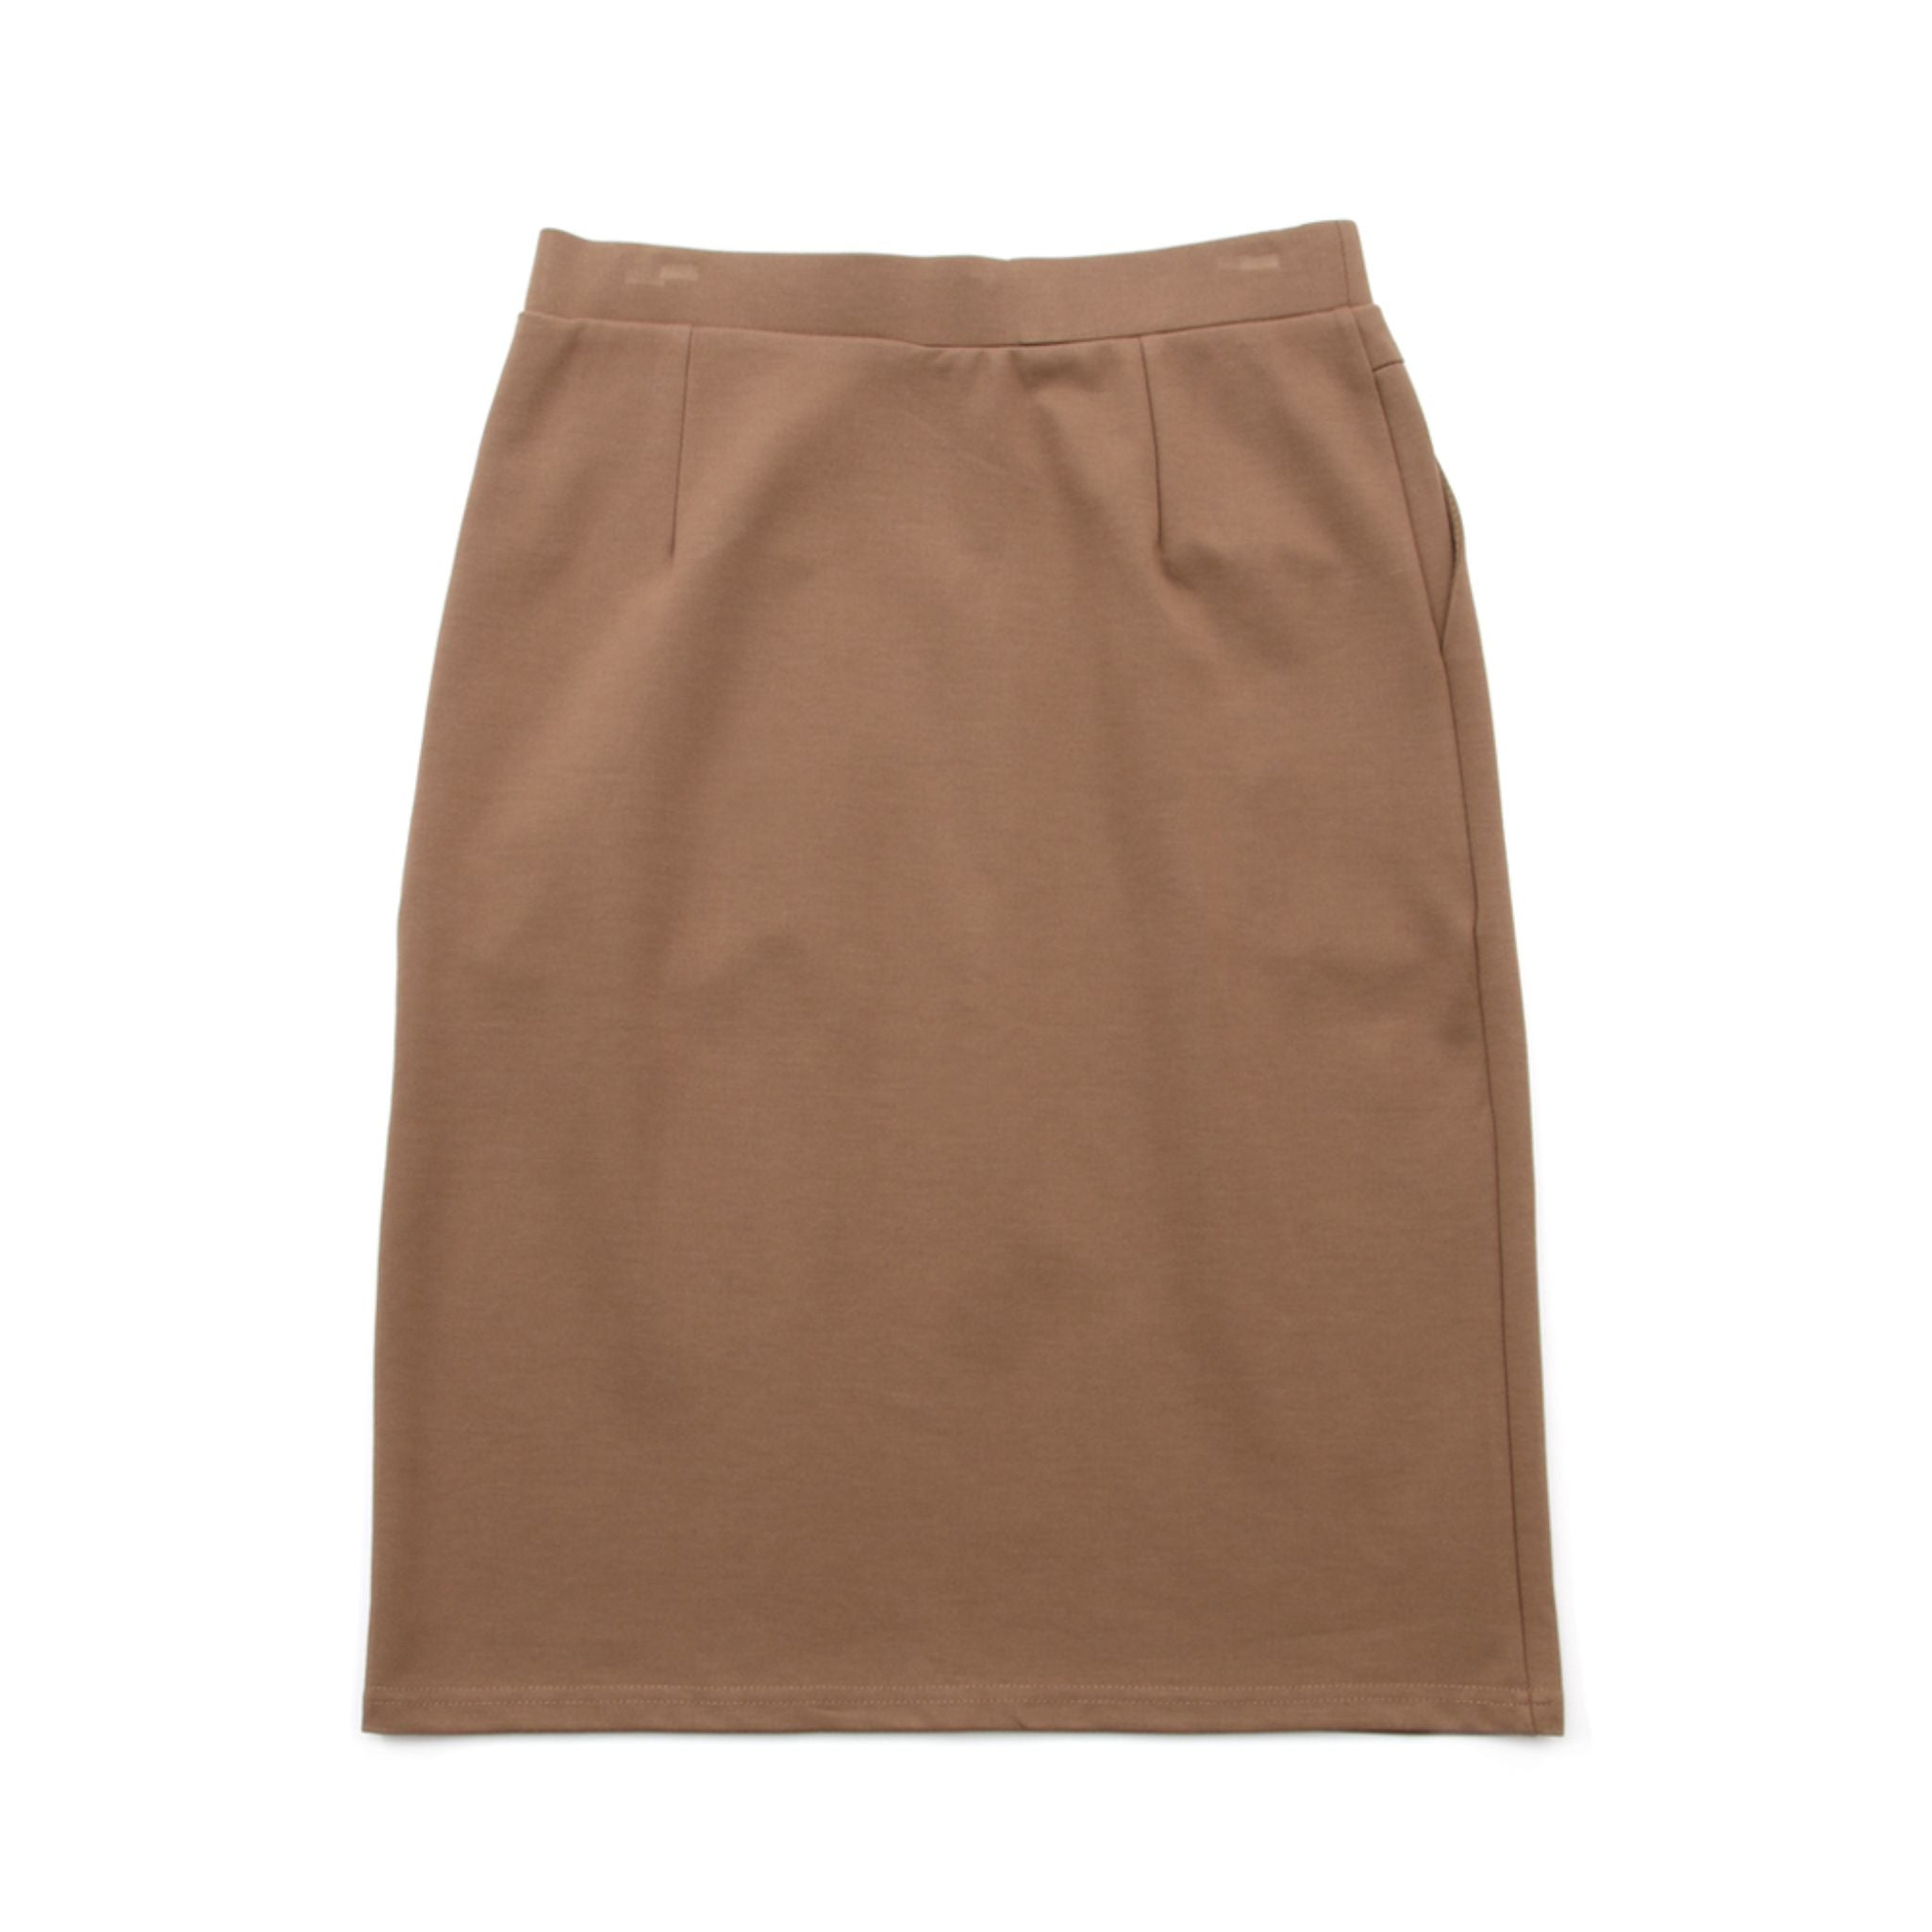 Enro Short Skirt - Brown (SHY16101C-307SK-BRO)